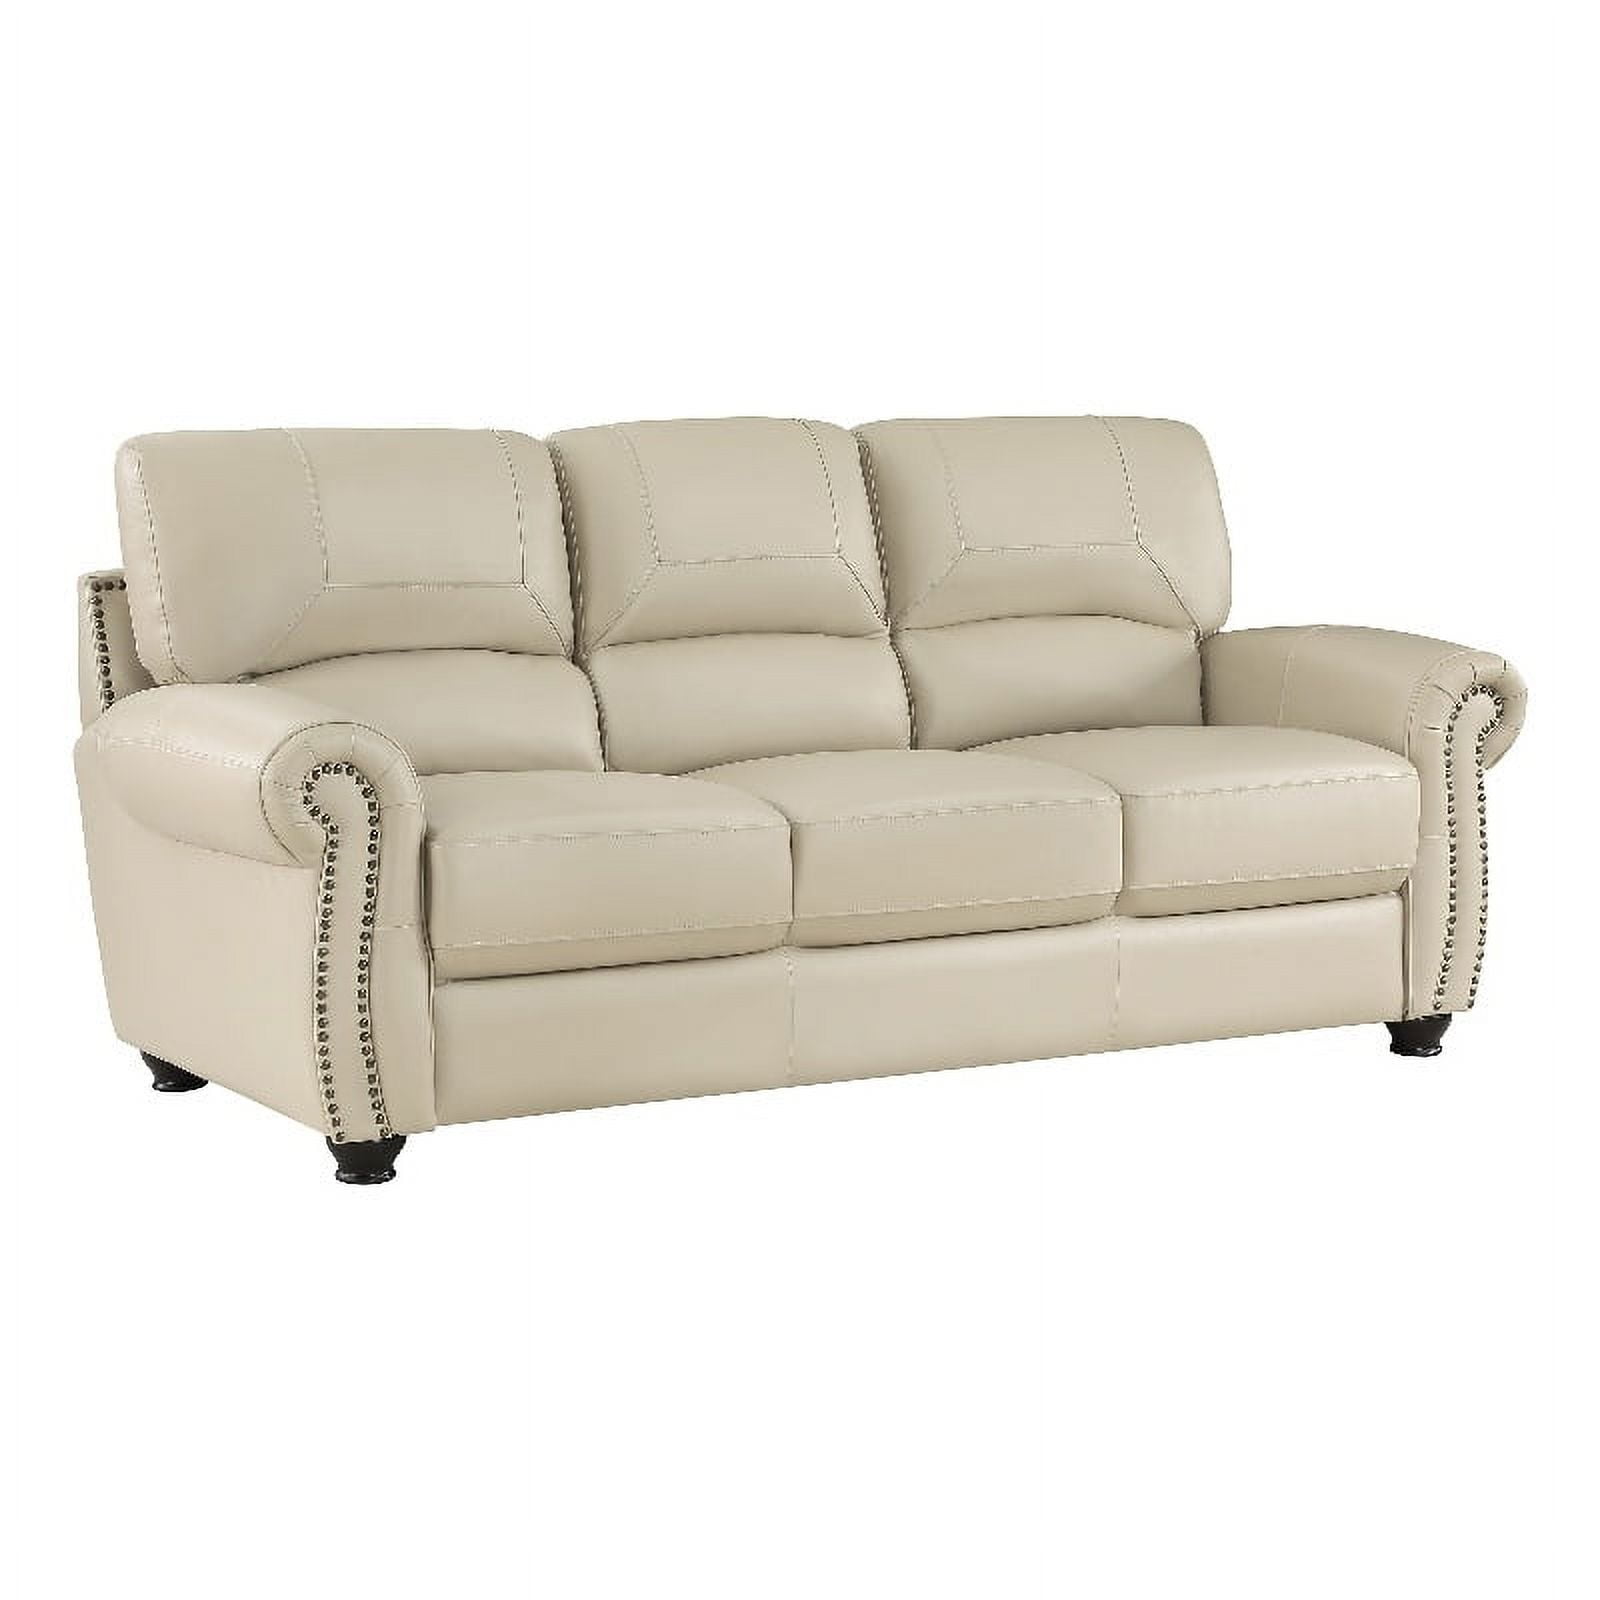 Homelegance Foxborough Leather Sofa In Cream